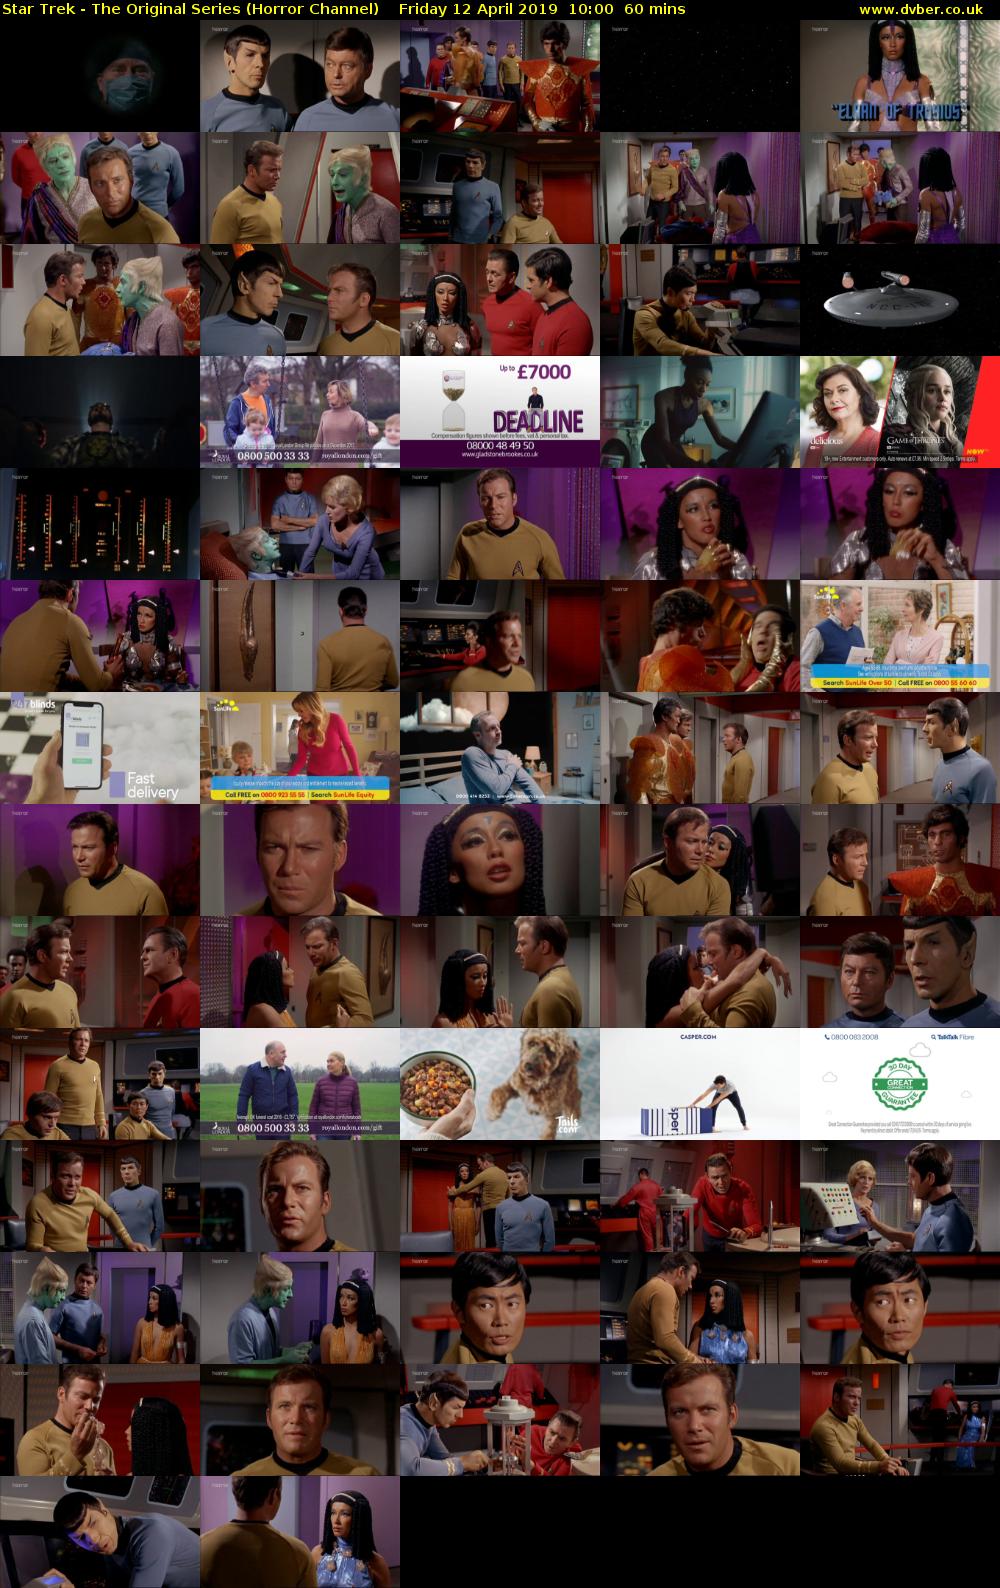 Star Trek - The Original Series (Horror Channel) Friday 12 April 2019 10:00 - 11:00